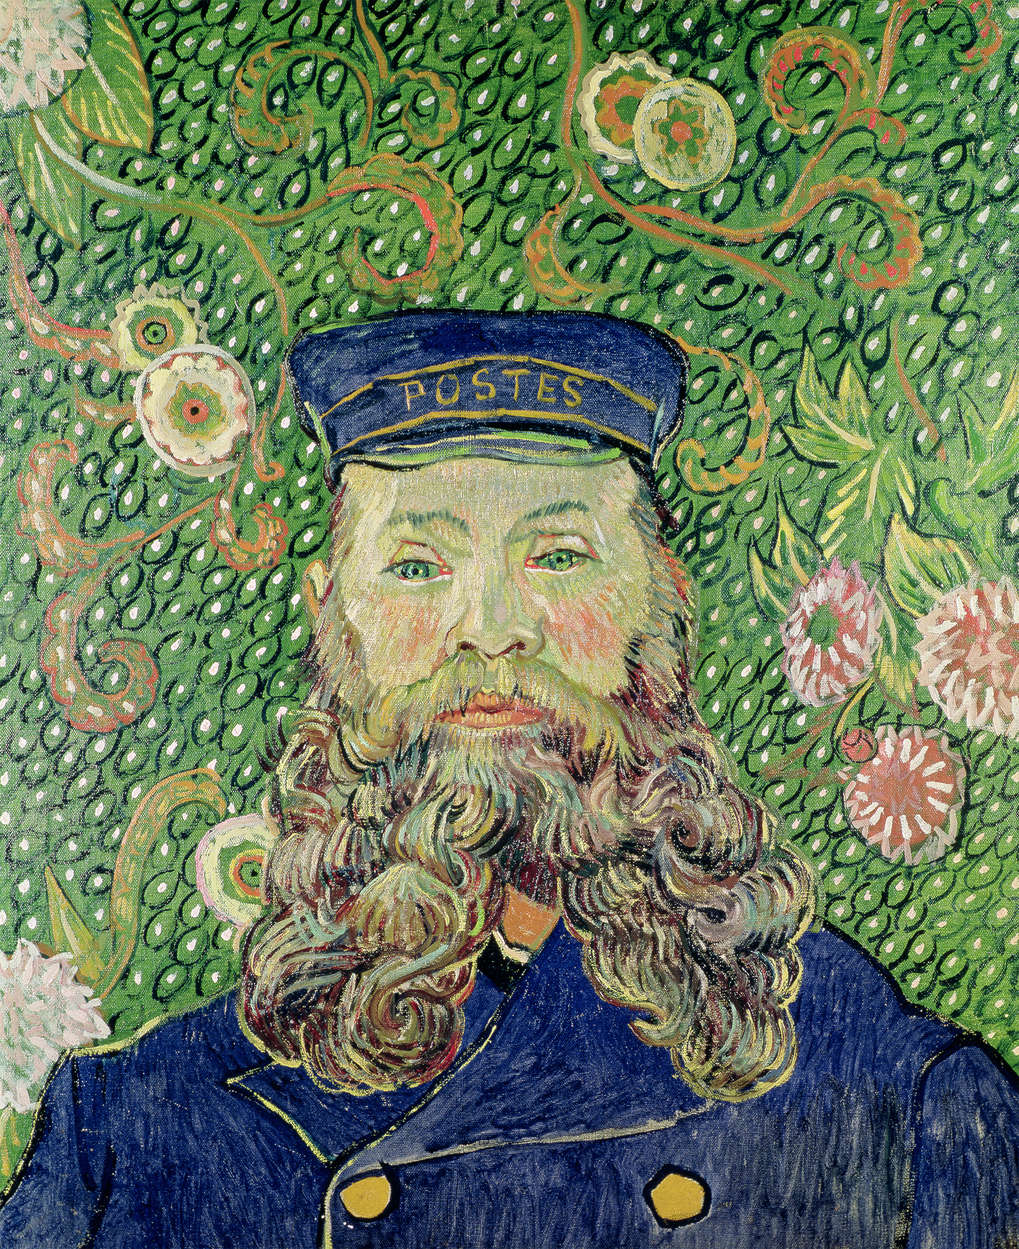             Mural "Retrato del cartero Joseph Roulin" de Vincent van Gogh
        